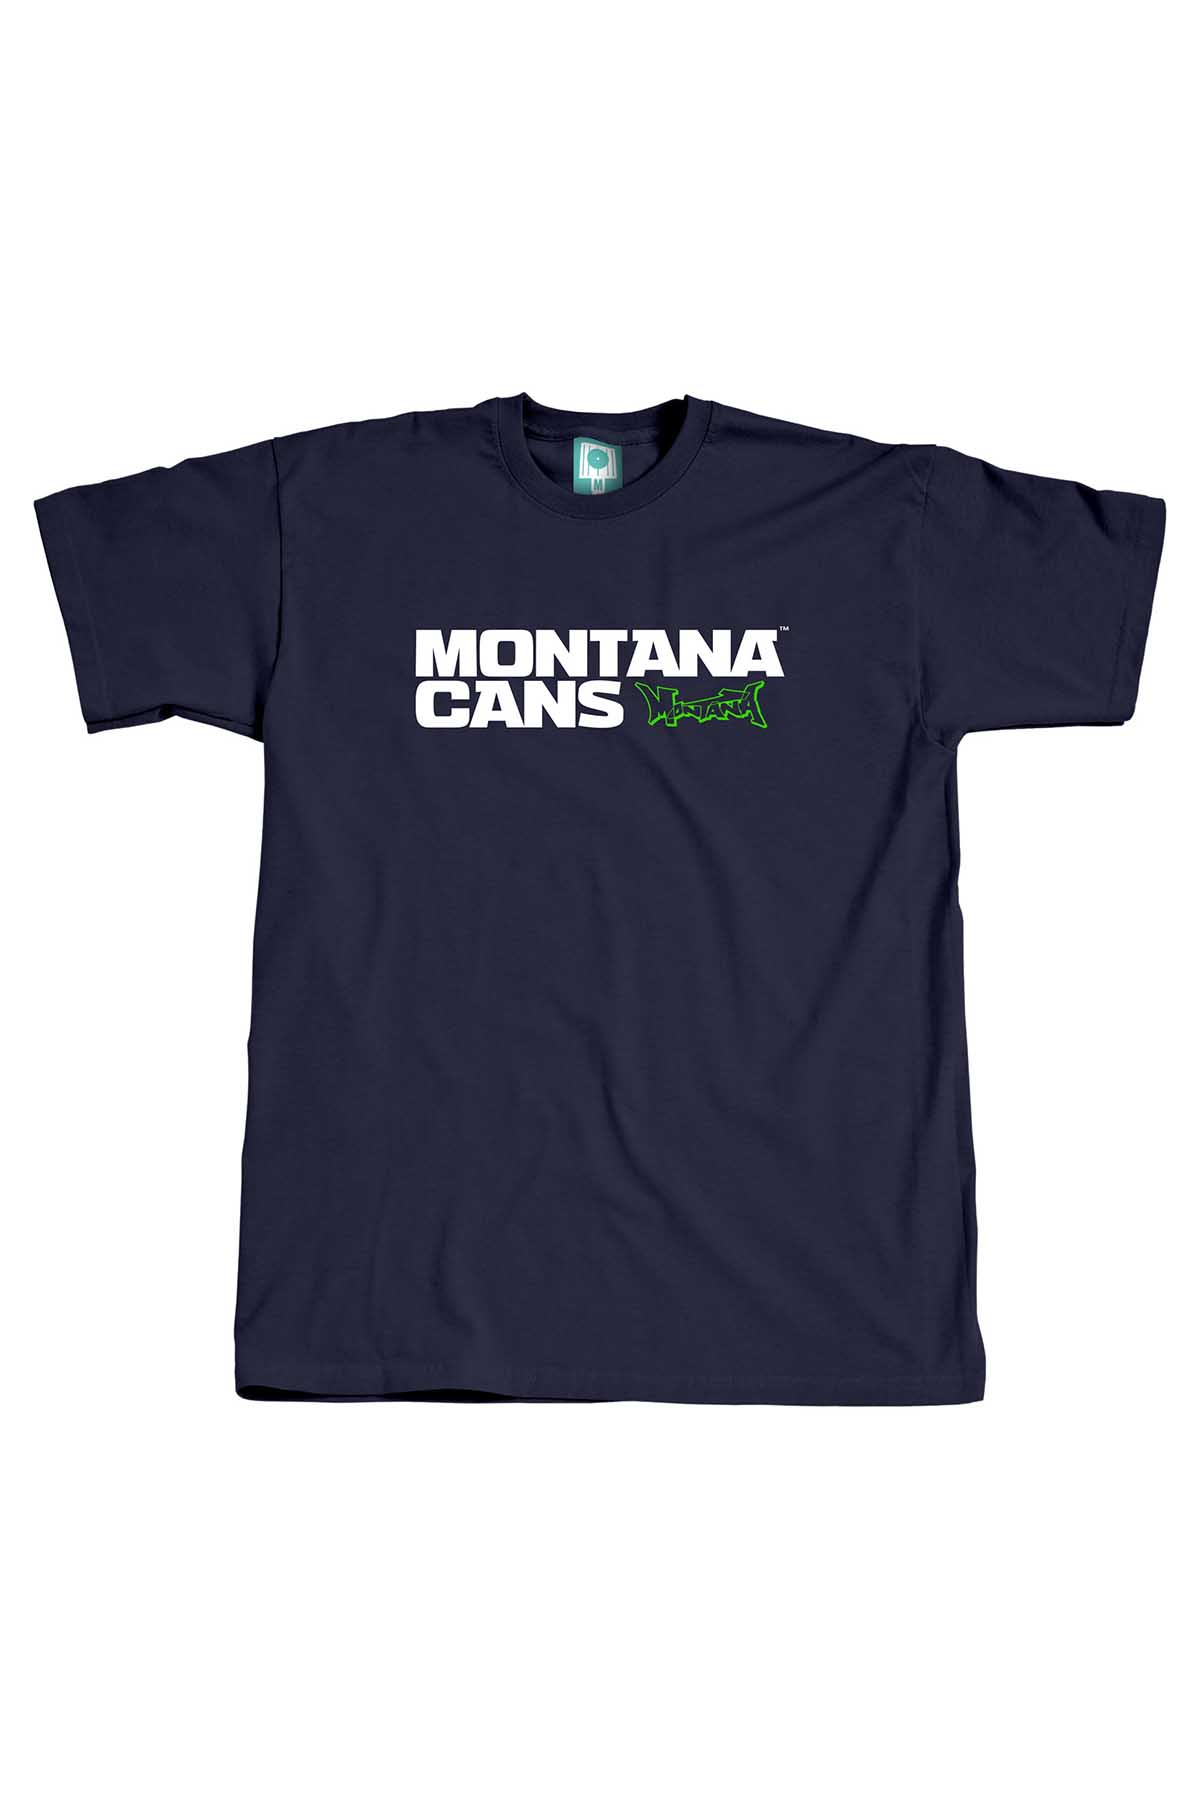 Montana TYPO+LOGO Navy T-Shirt